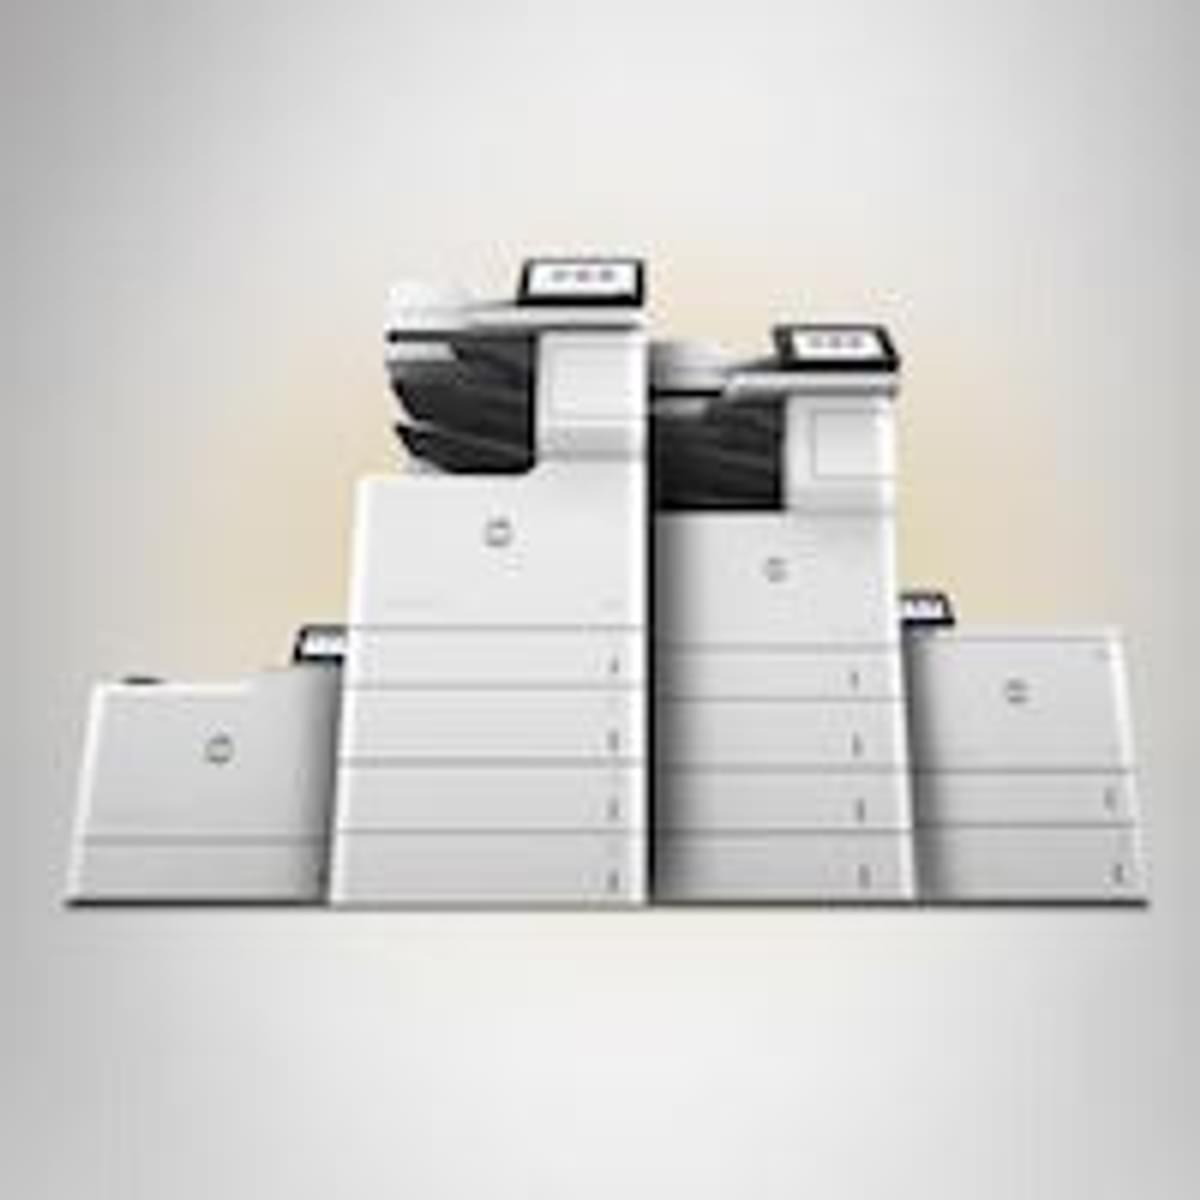 HP introduceert HP LaserJet Enterprise 600 Series image